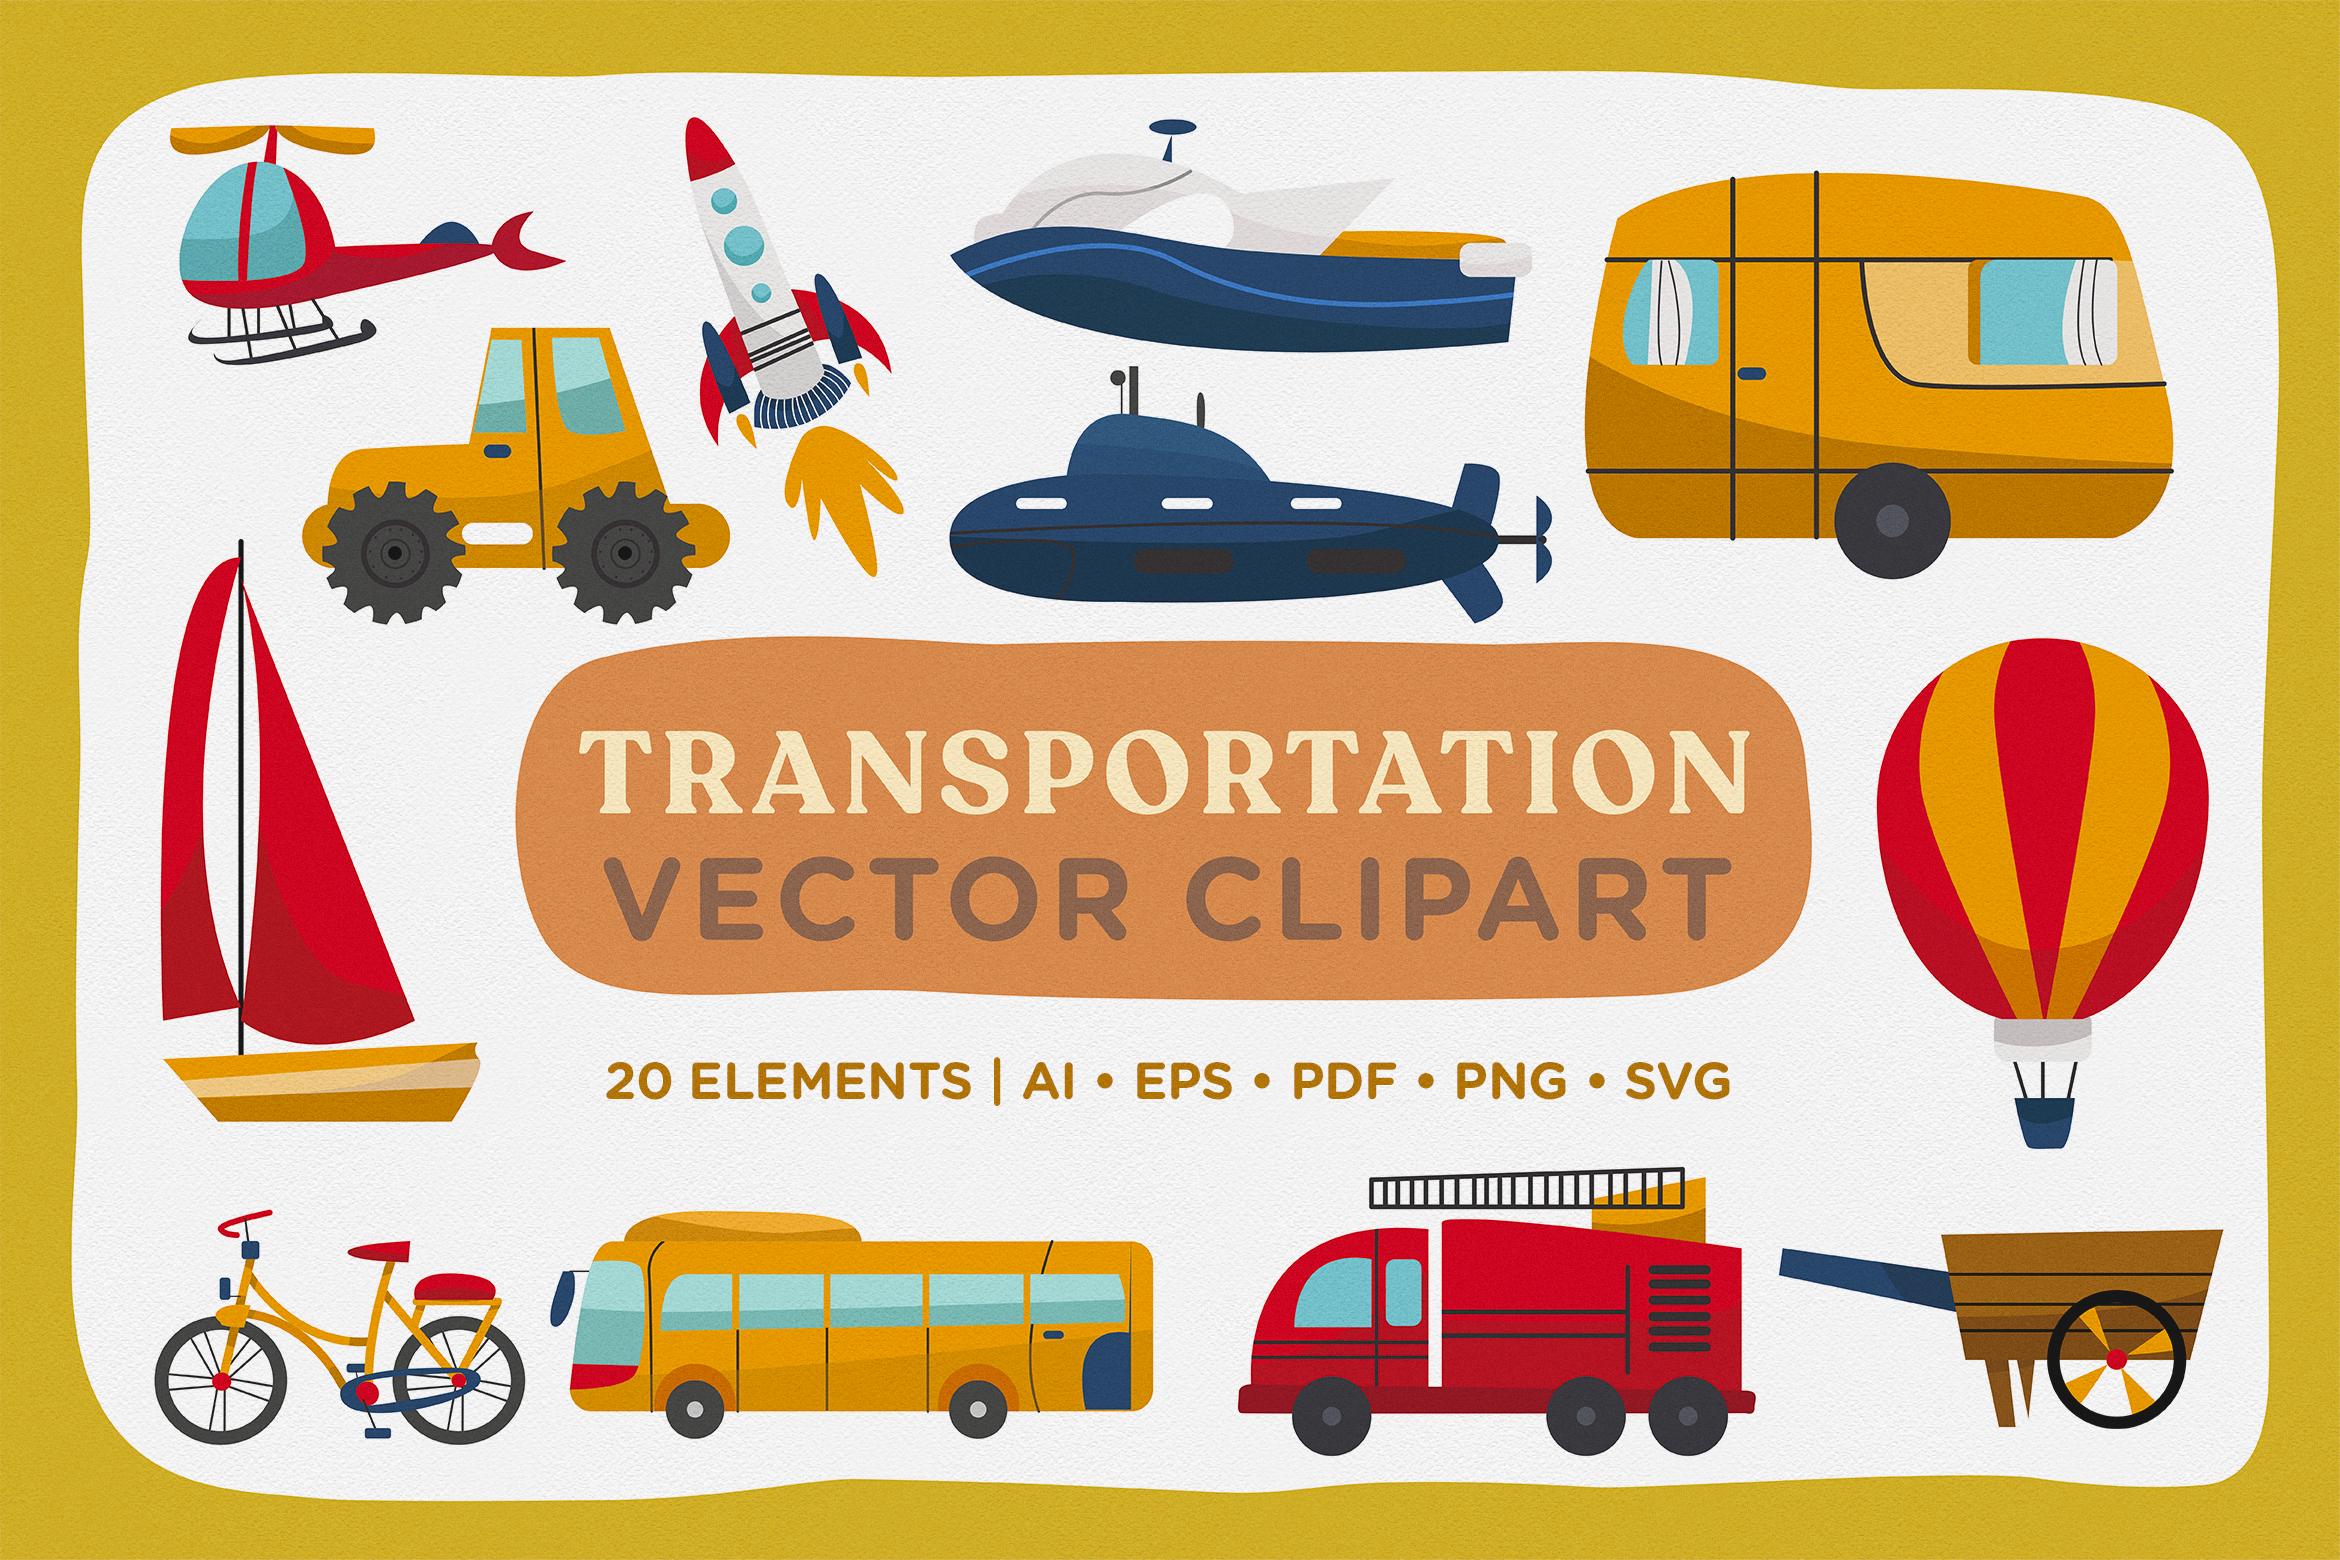 Transportation Vector Clipart Pack